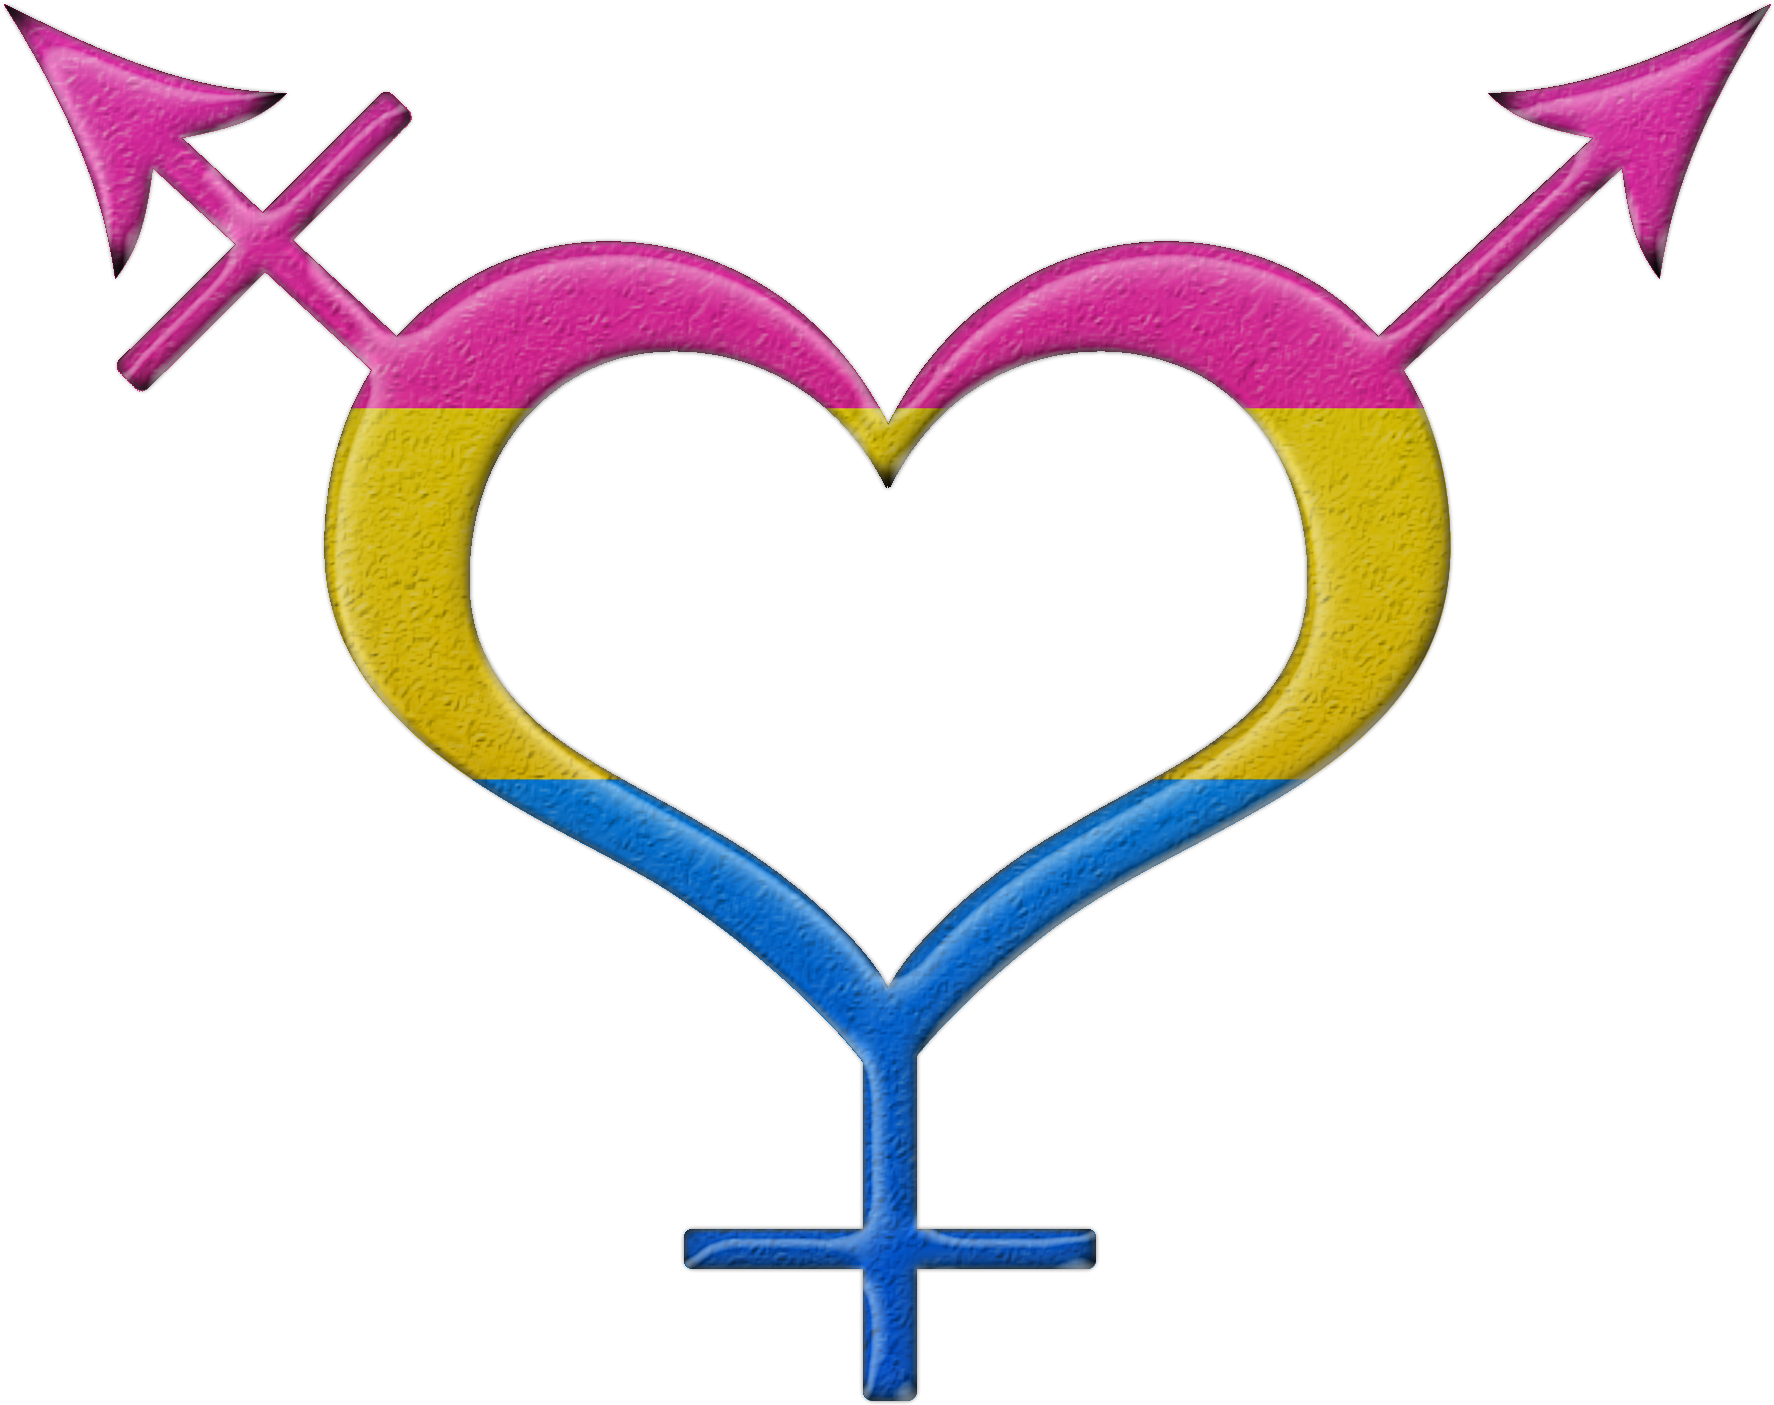 Pansexual Pride Heart Shaped Gender Neutral Symbol - Pansexual Gender Symbol (1820x1500)